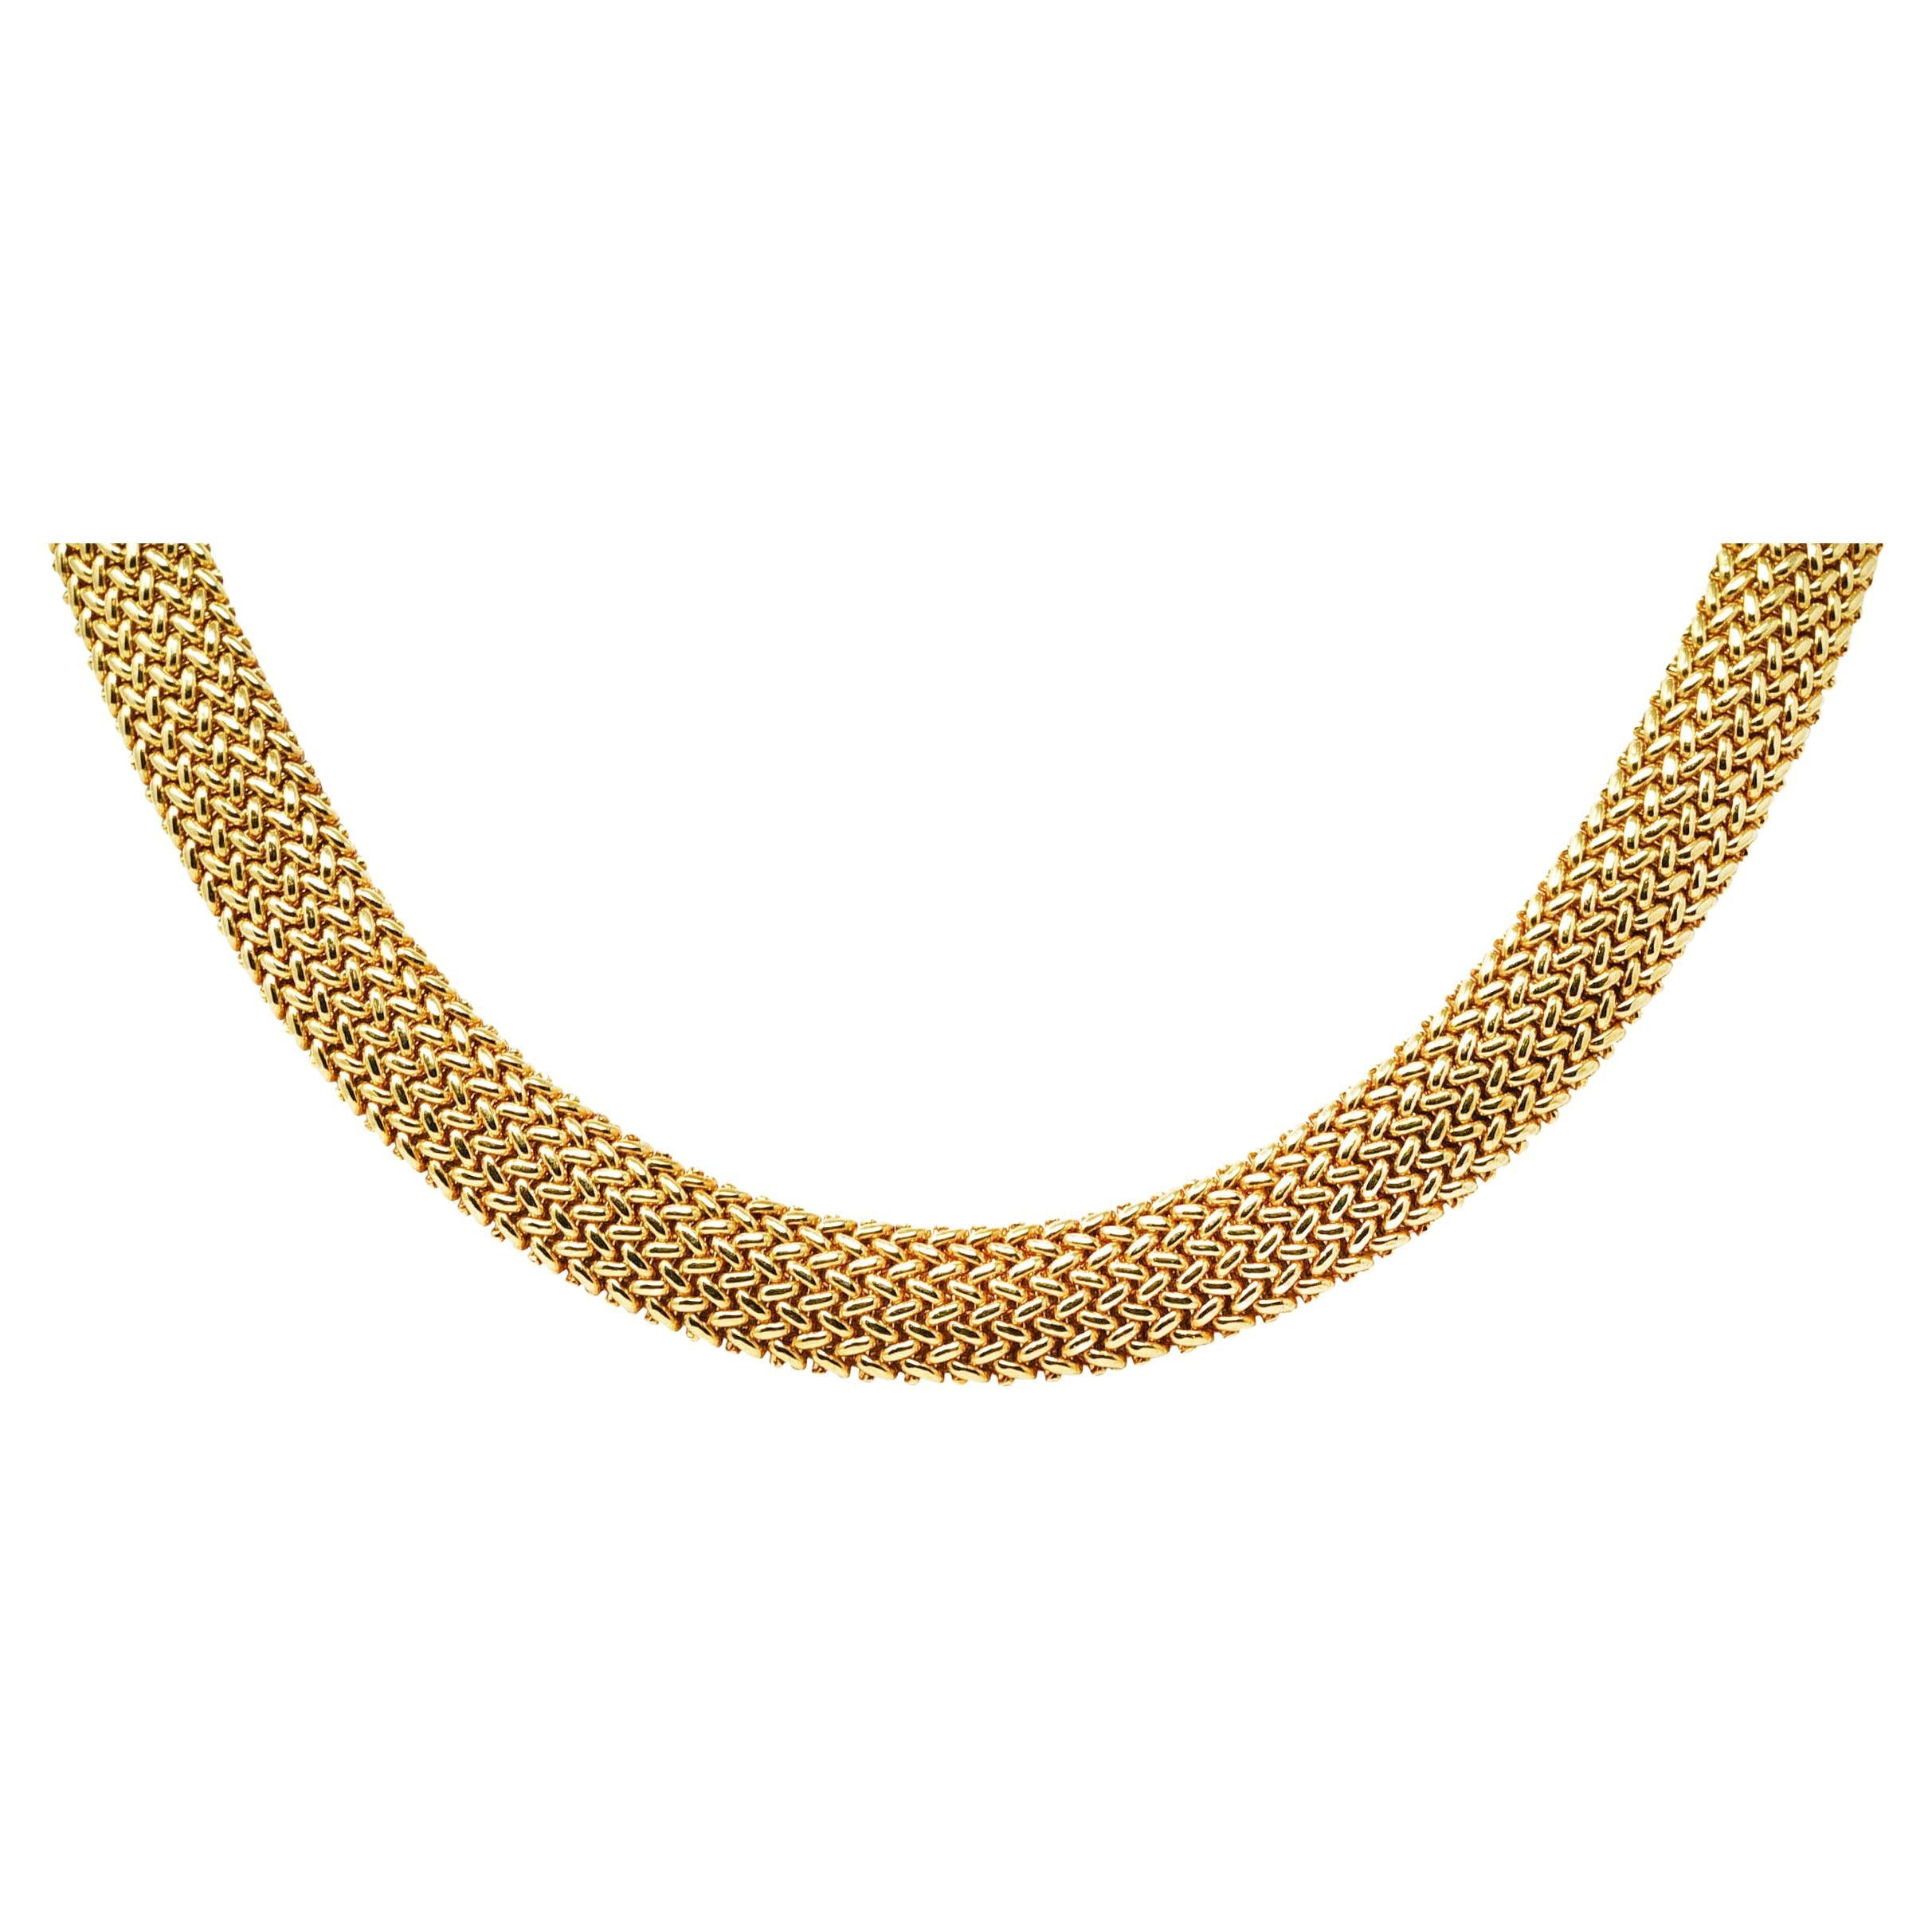 Tiffany & Co. 1960's 18 Karat Yellow Gold Woven Mesh Vintage Collar Necklace